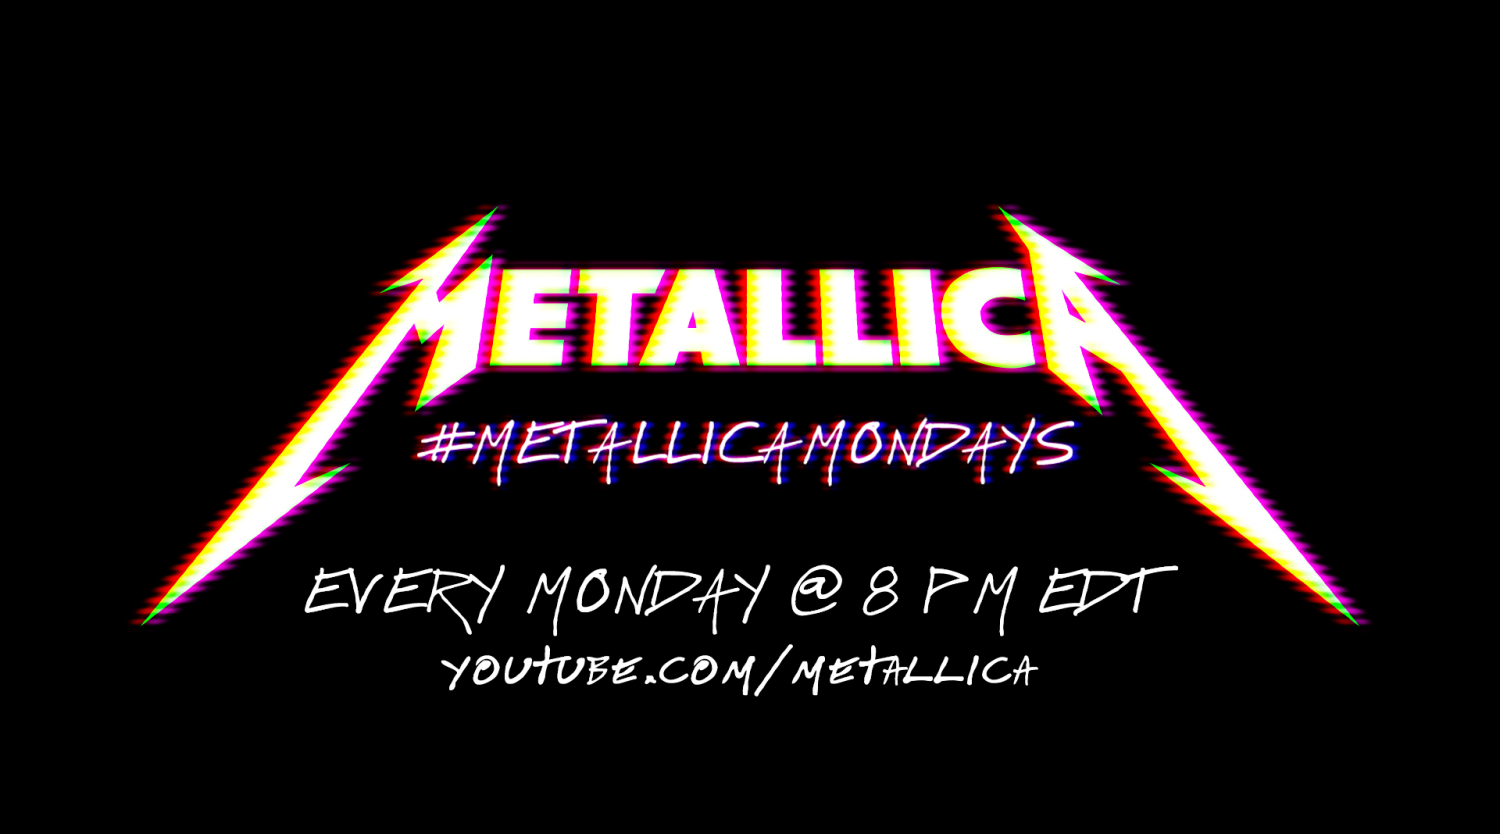 #MetallicaMondays: Free, Weekly Concert Streaming Series